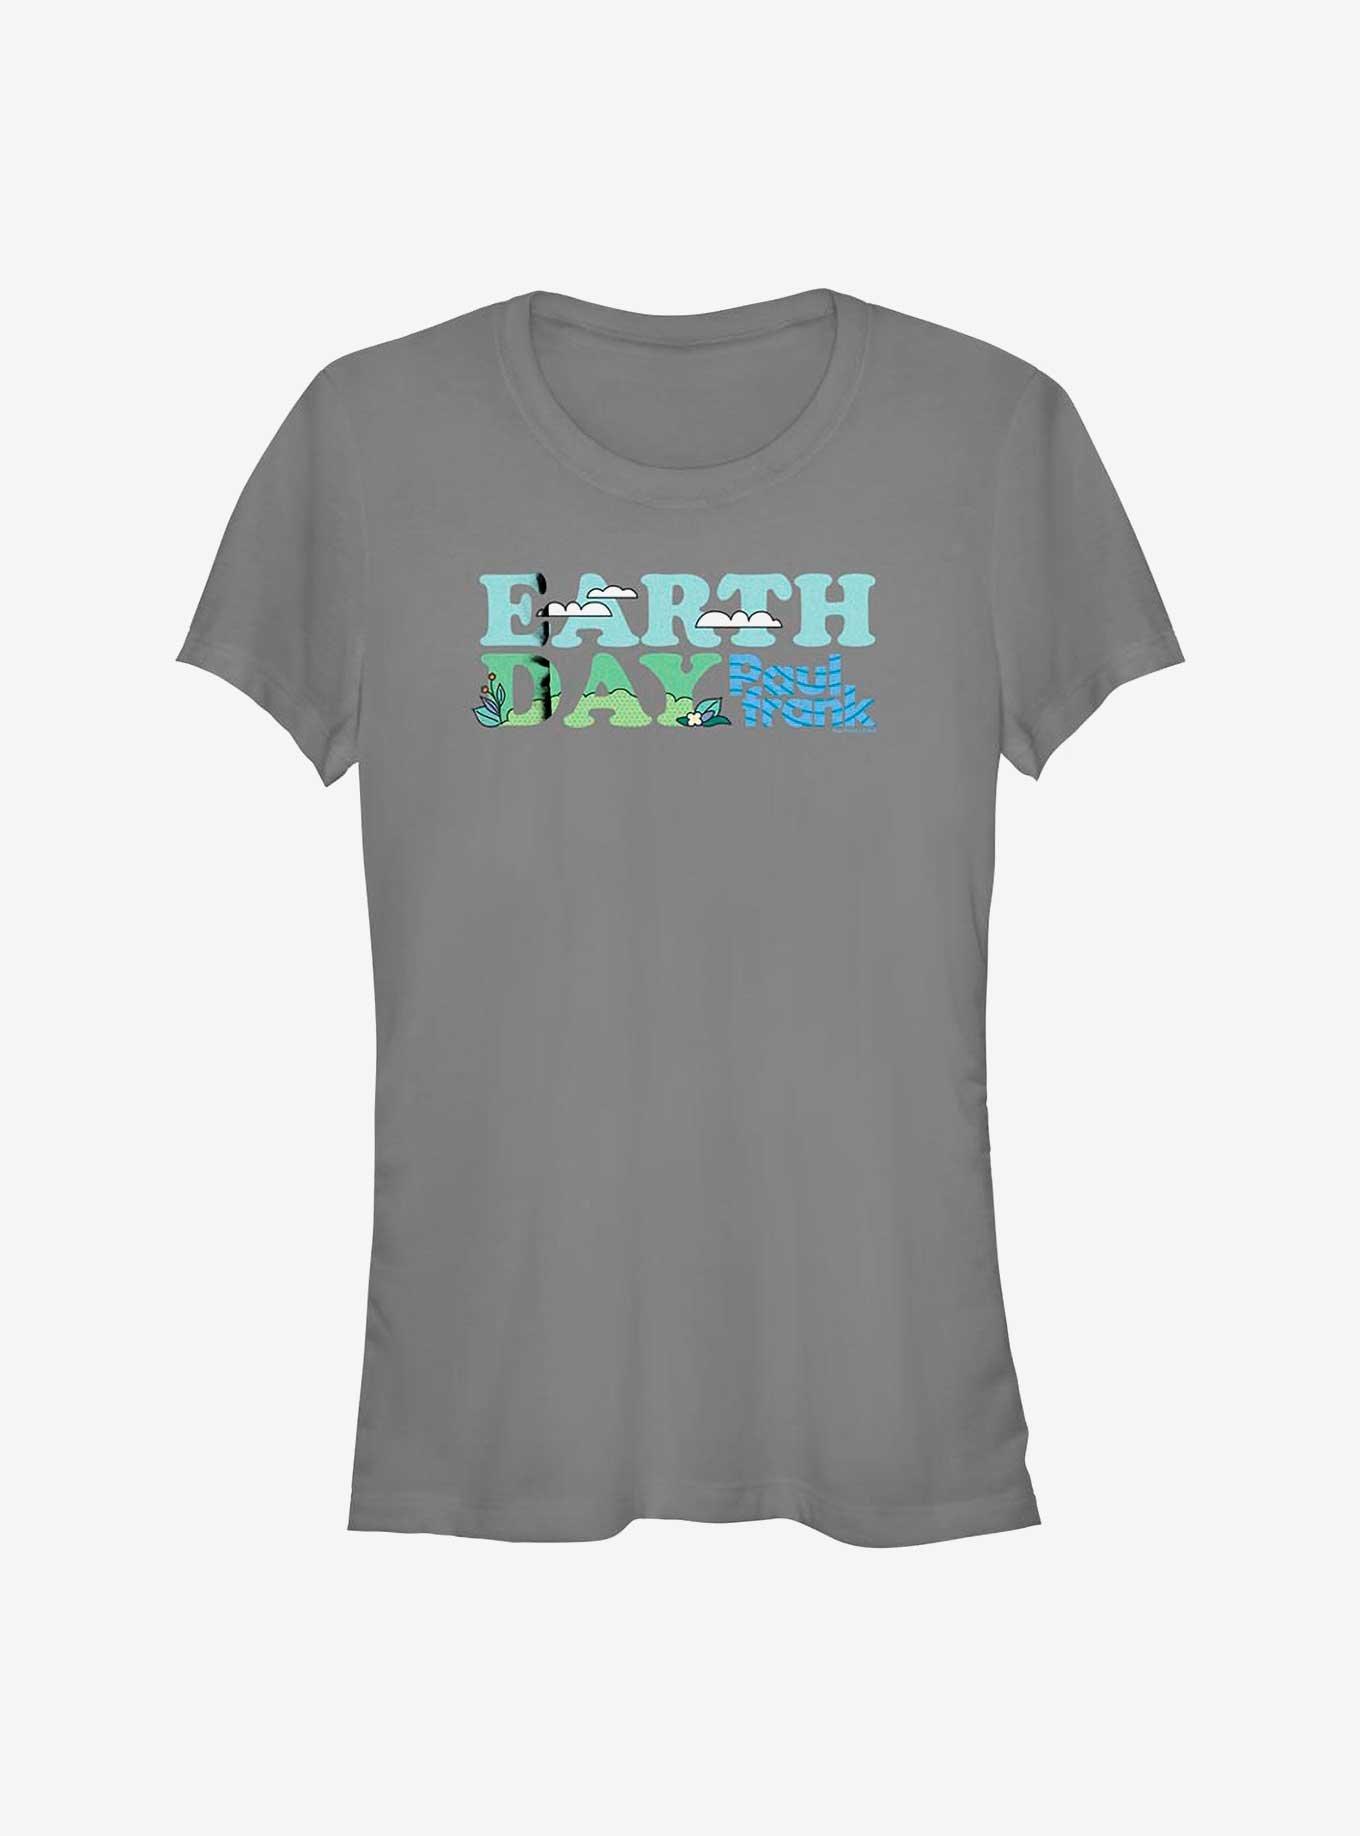 Paul Frank Earth Day Girls T-Shirt, , hi-res